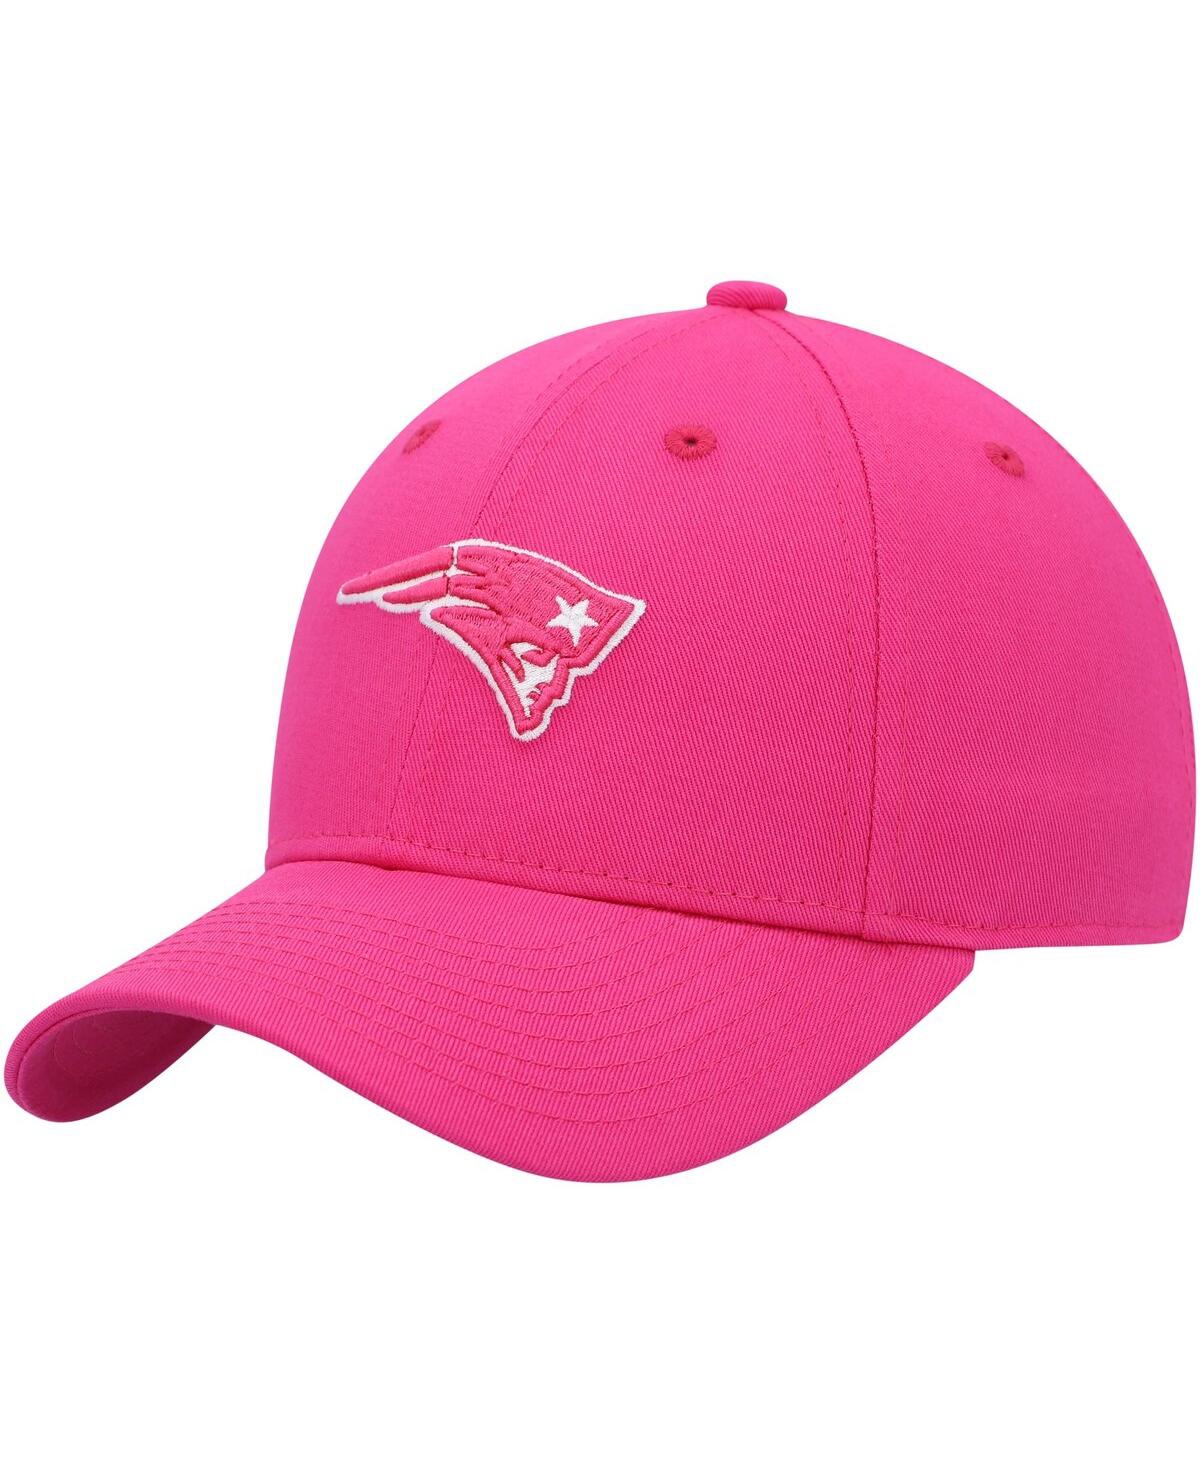 Outerstuff Kids' Big Girls Pink New England Patriots Structured Adjustable Hat